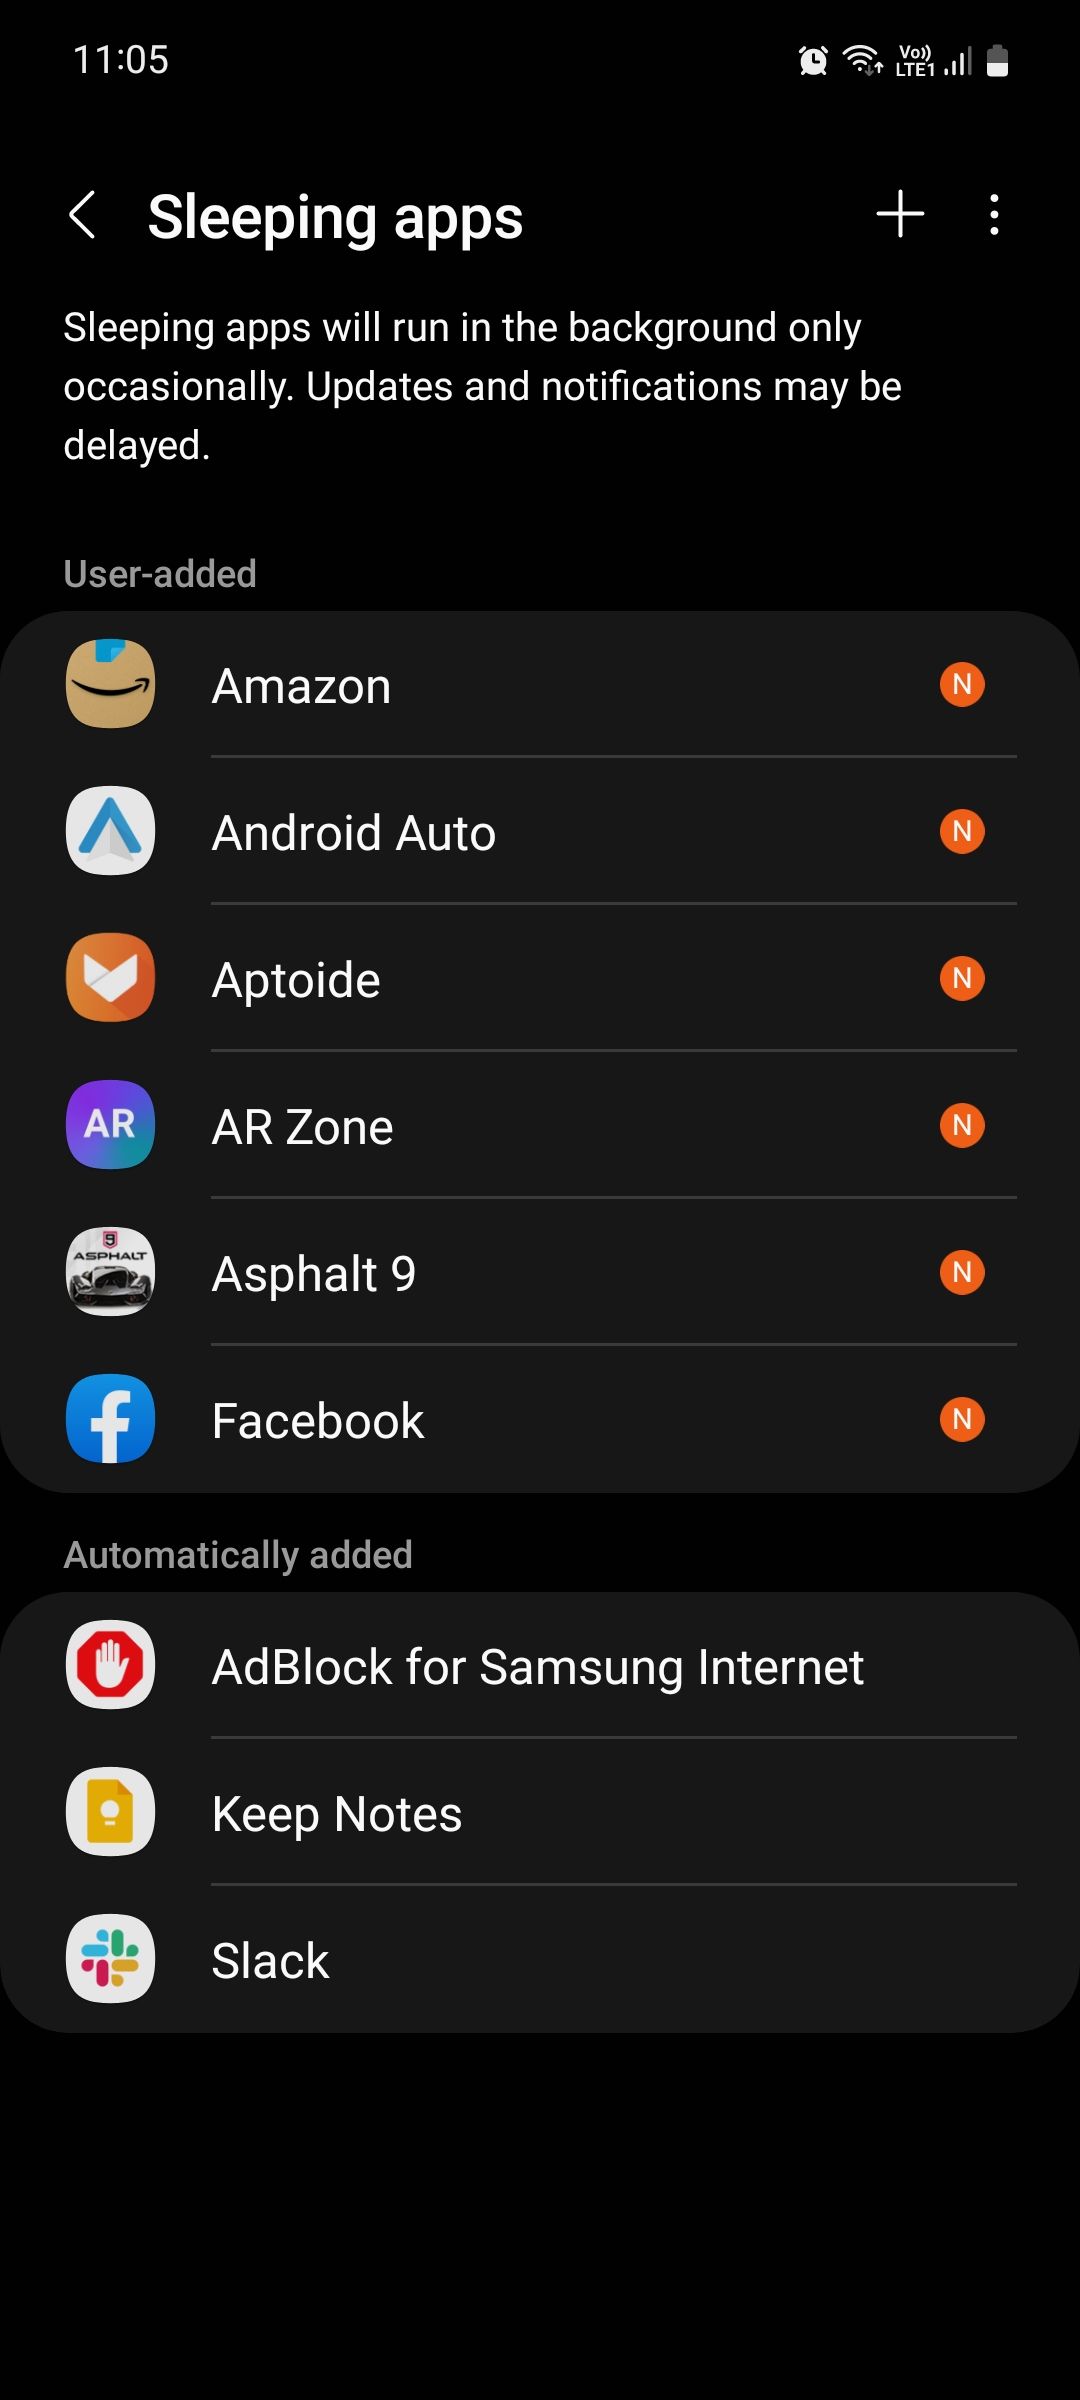 Samsung One UI Sleeping apps list